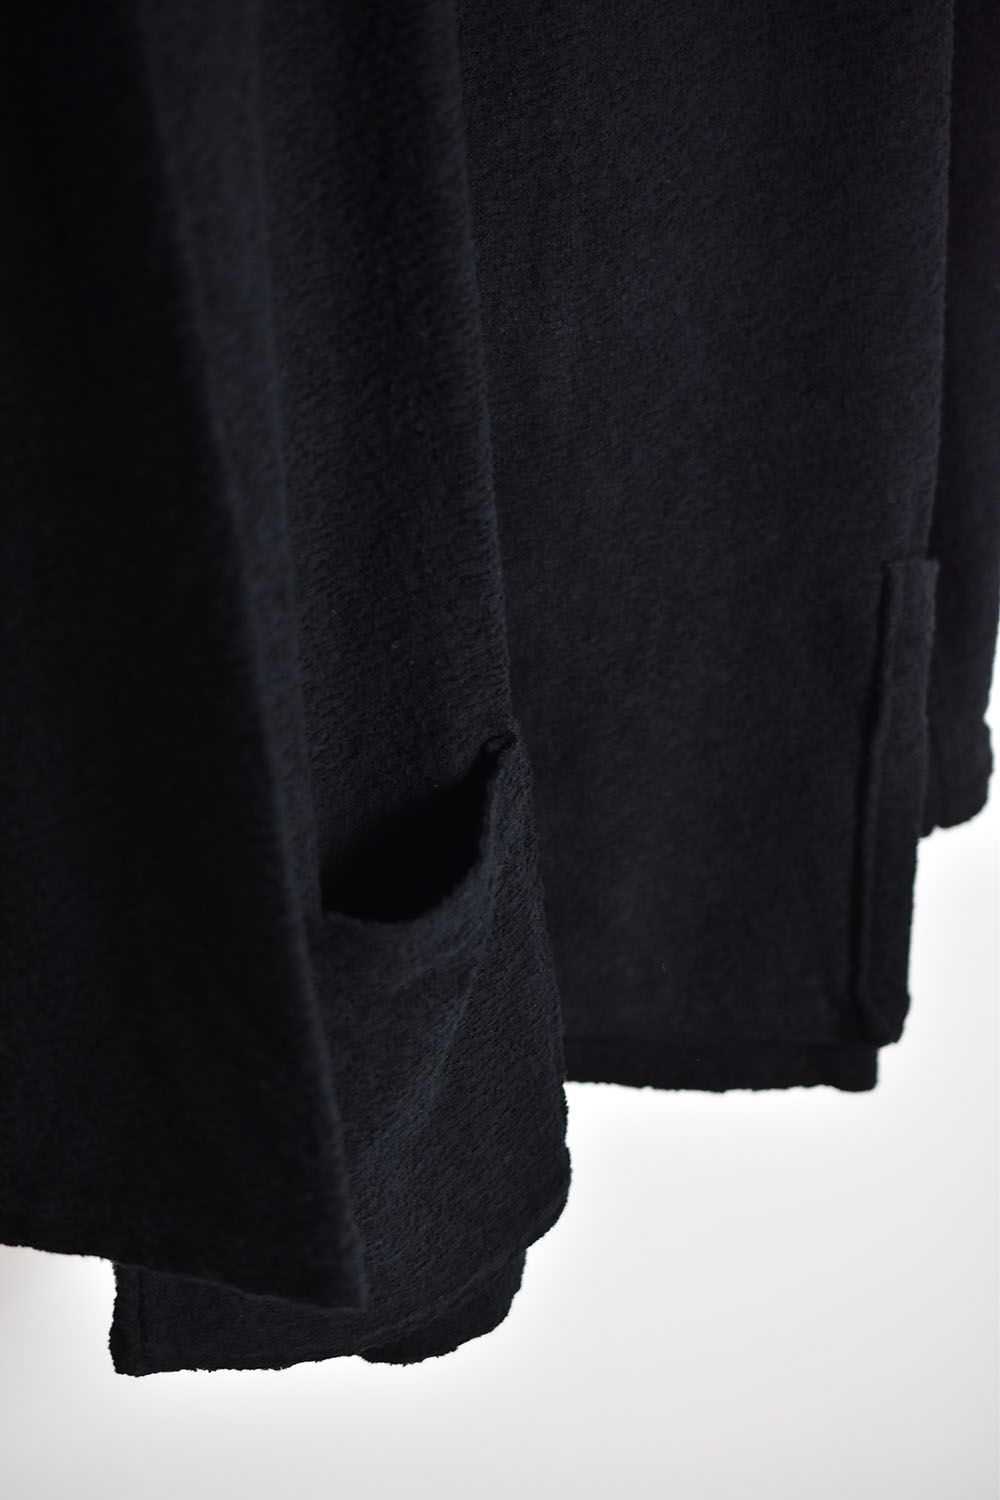 Cotton Random Pile Cut&Swen Long Sleeve"Black"/コットンランダムパイルカットソーロングスリーブ"ブラック"